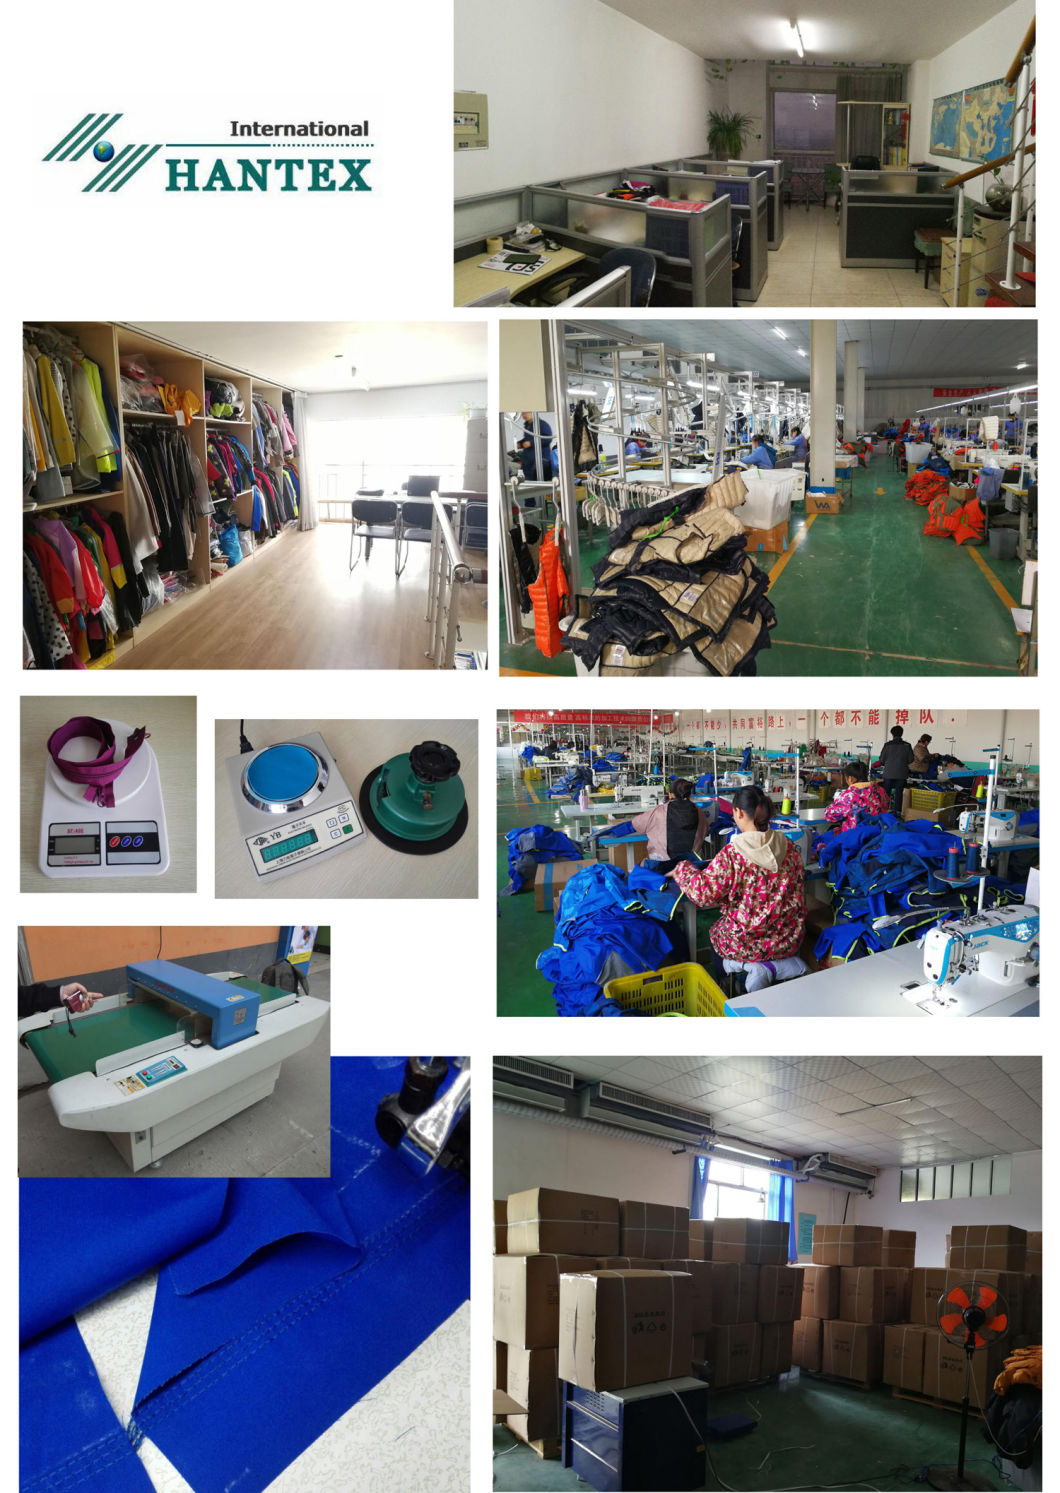 Long Blue Rainwear PVC Raincoat for Adult by China Factory